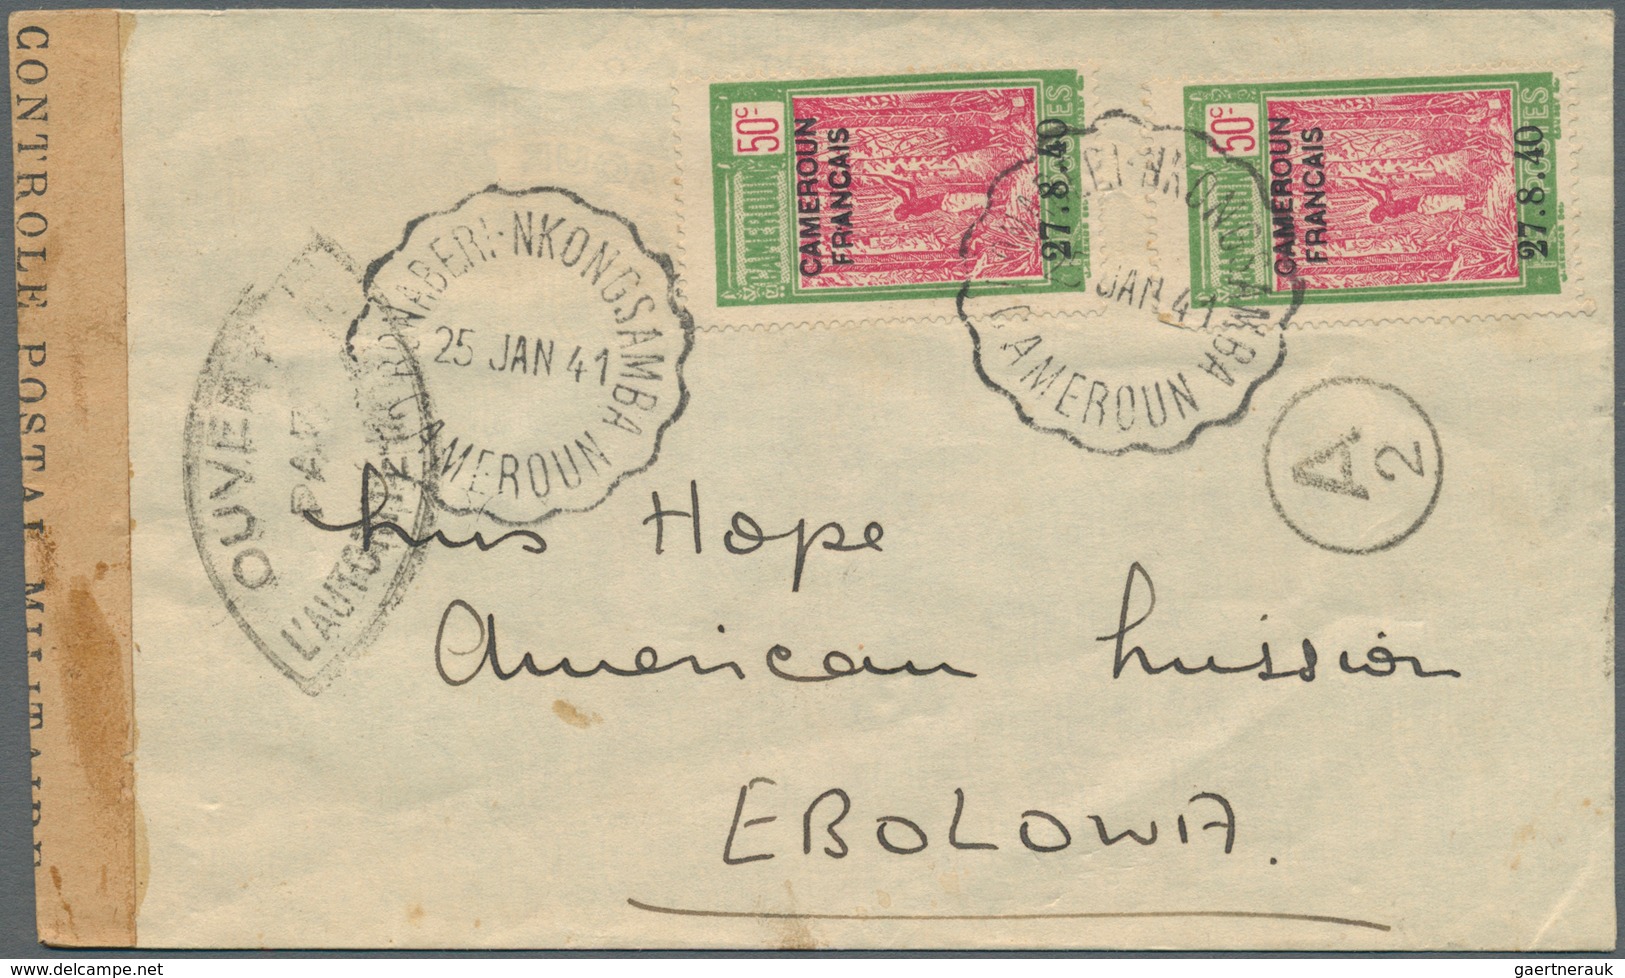 Französische Kolonien: 1871/1944: 87 better covers and postal stationeries including picture postcar